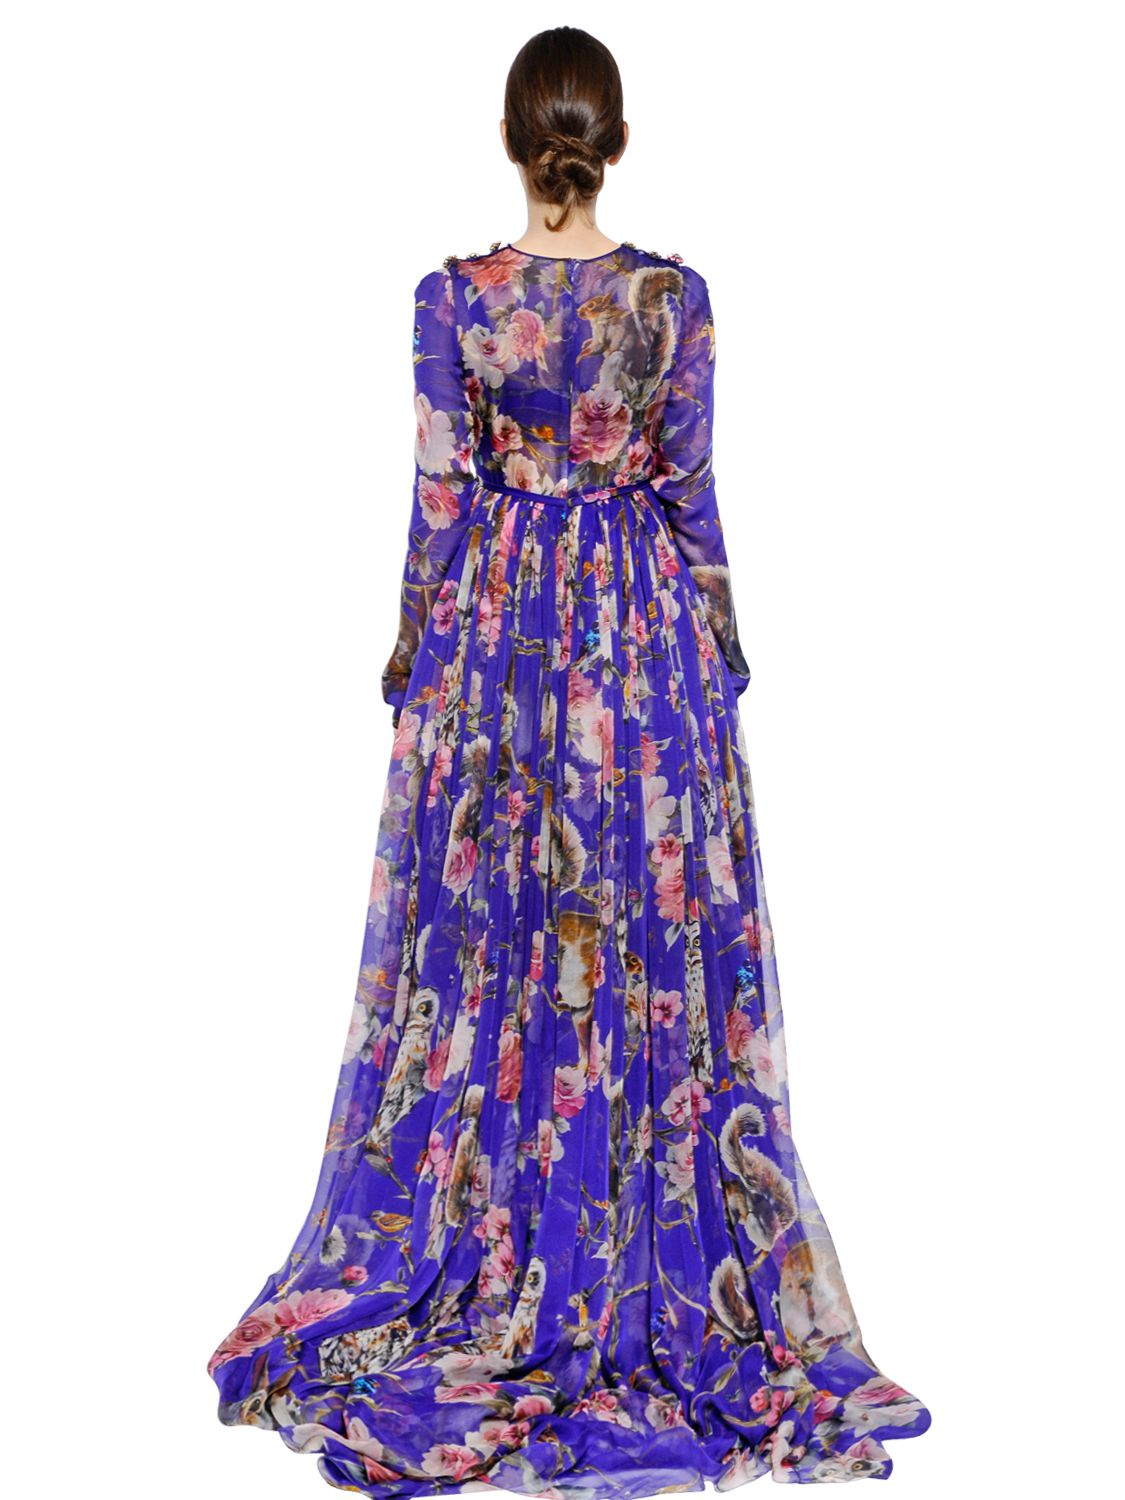 Dolce & Gabbana Floral Printed Silk Chiffon Dress in Violet (Purple) - Lyst